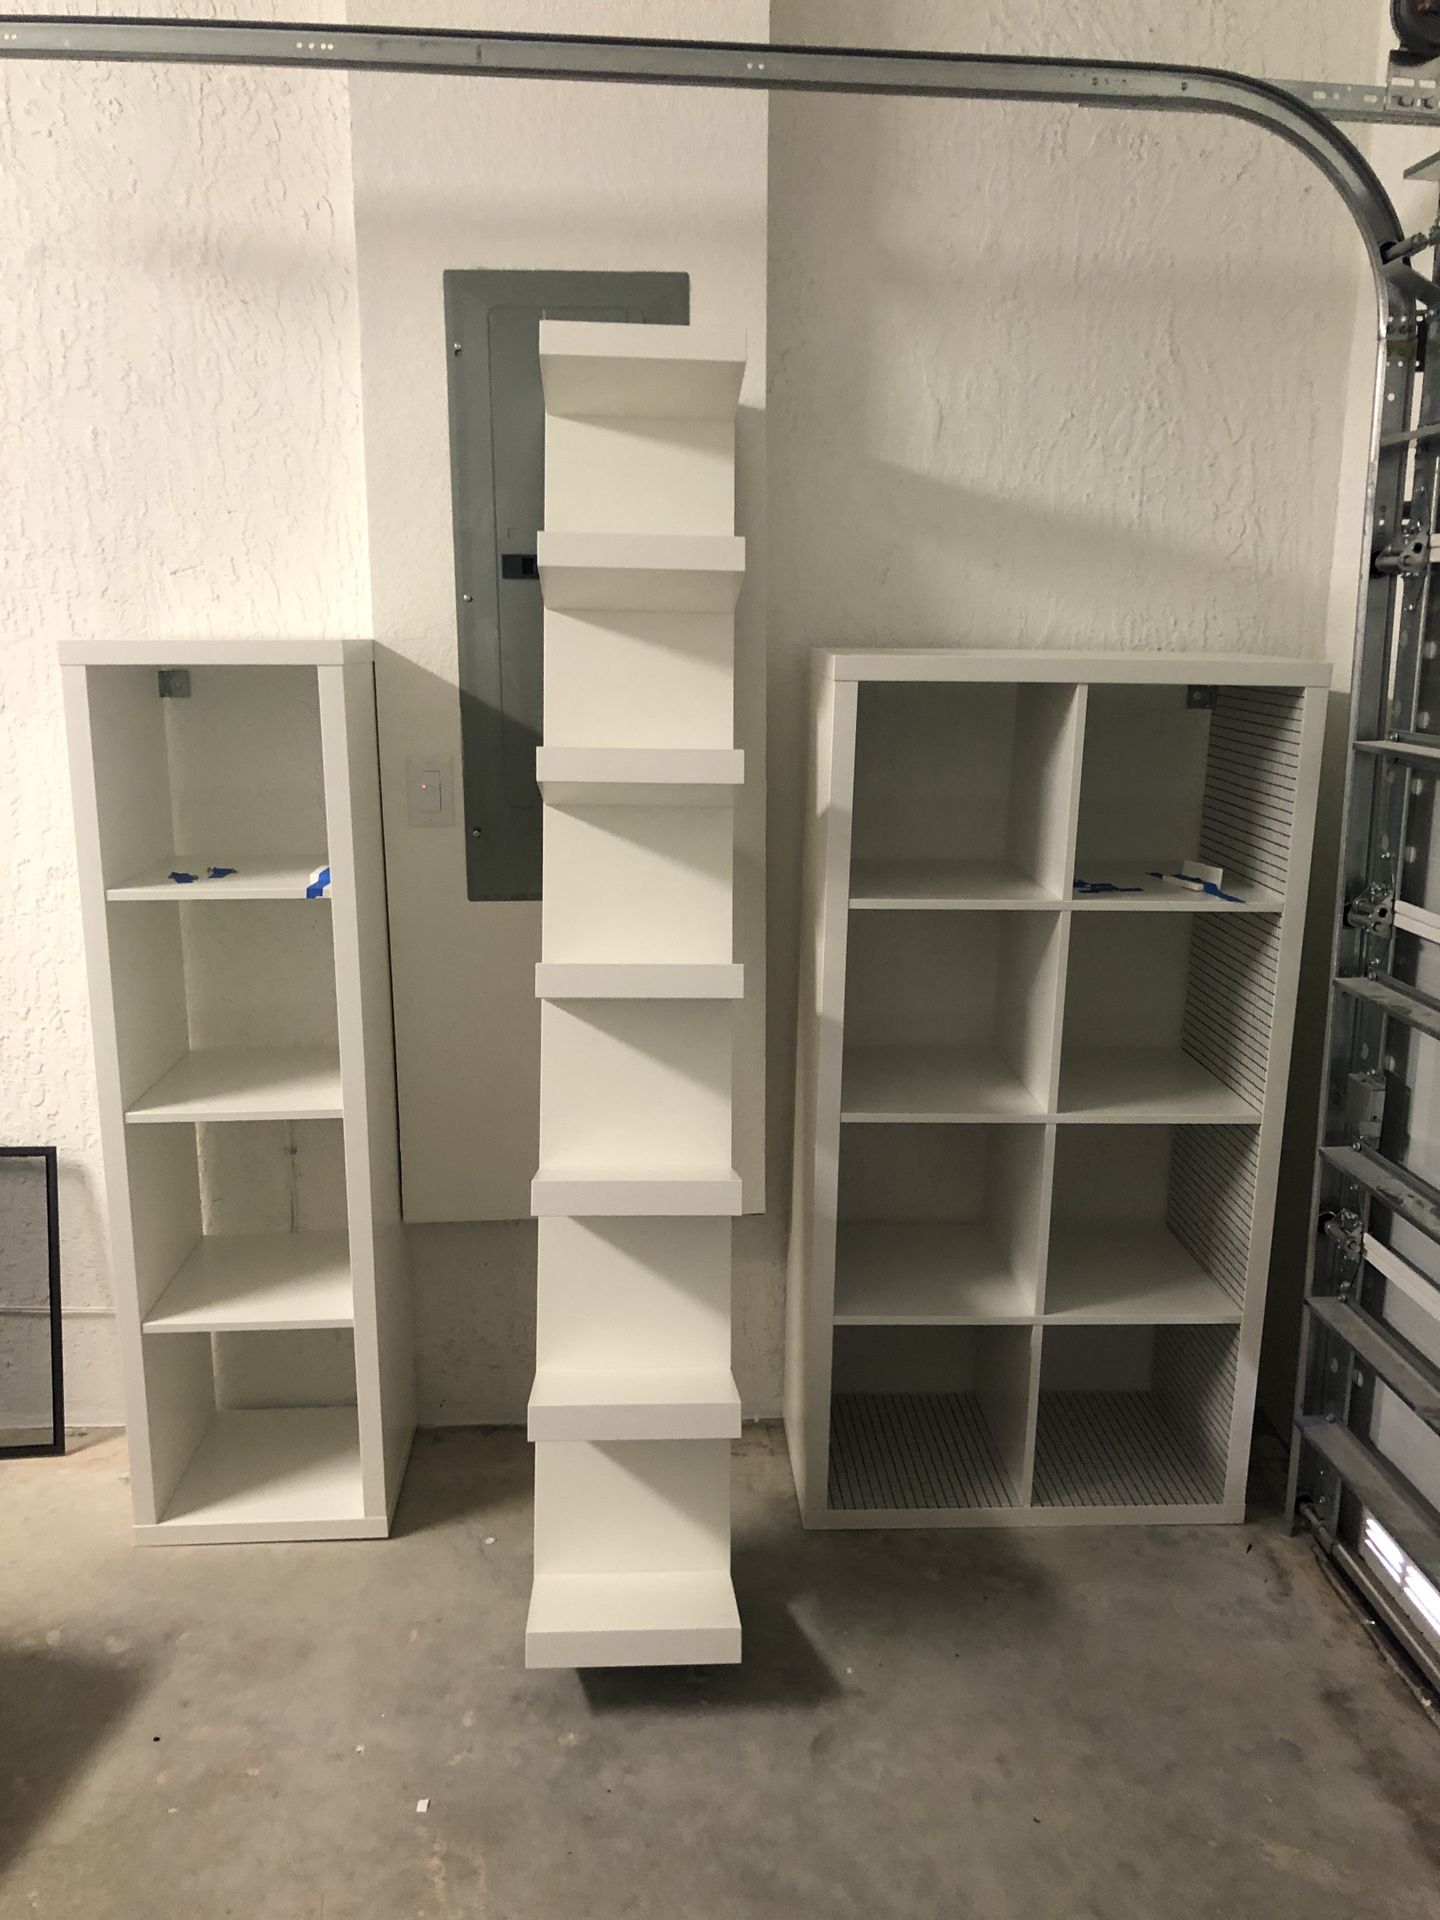 IKEA Shelves combo with cabinets / W or W/O Bins